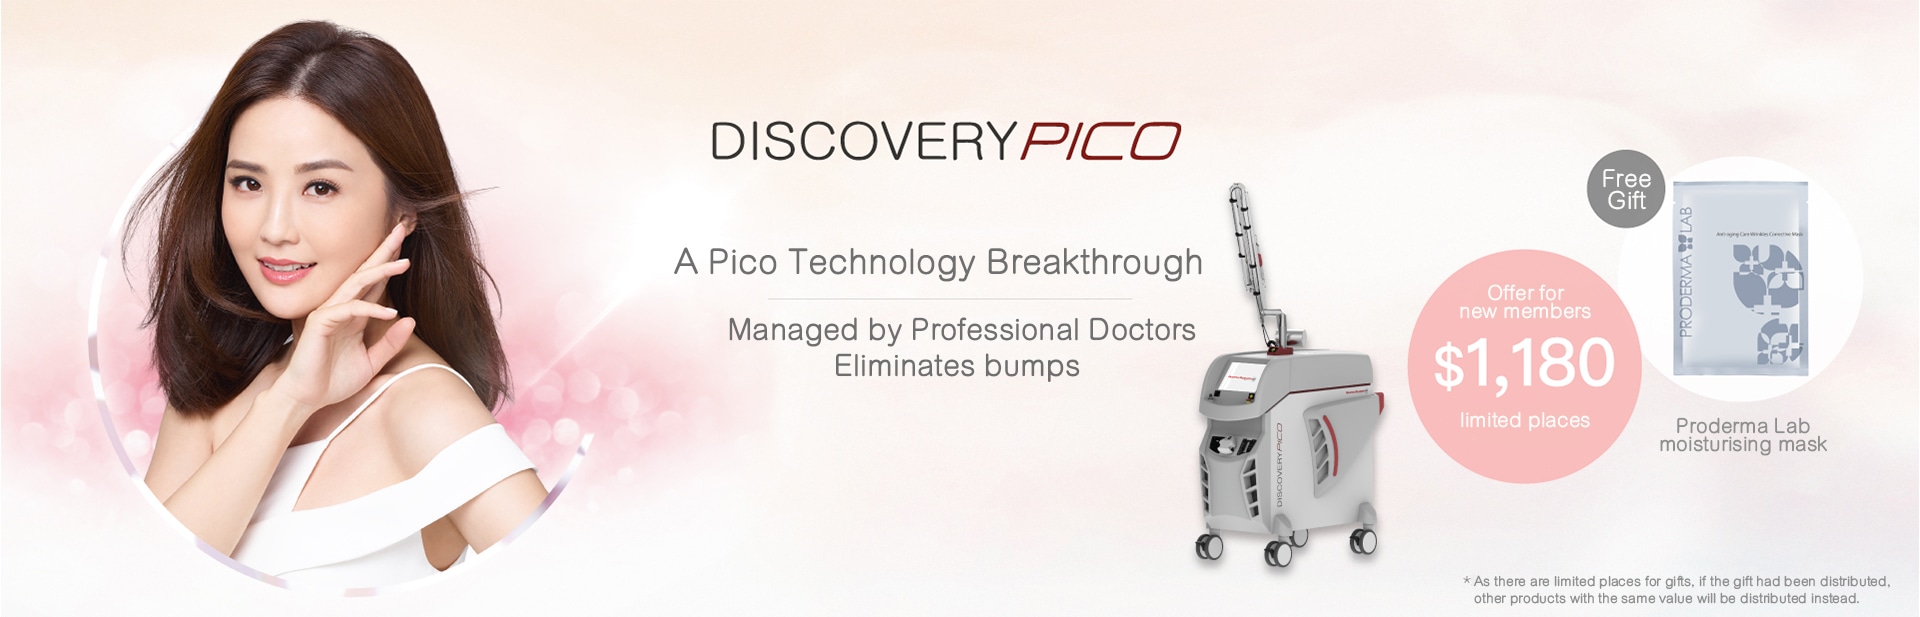 Discovery Pico price